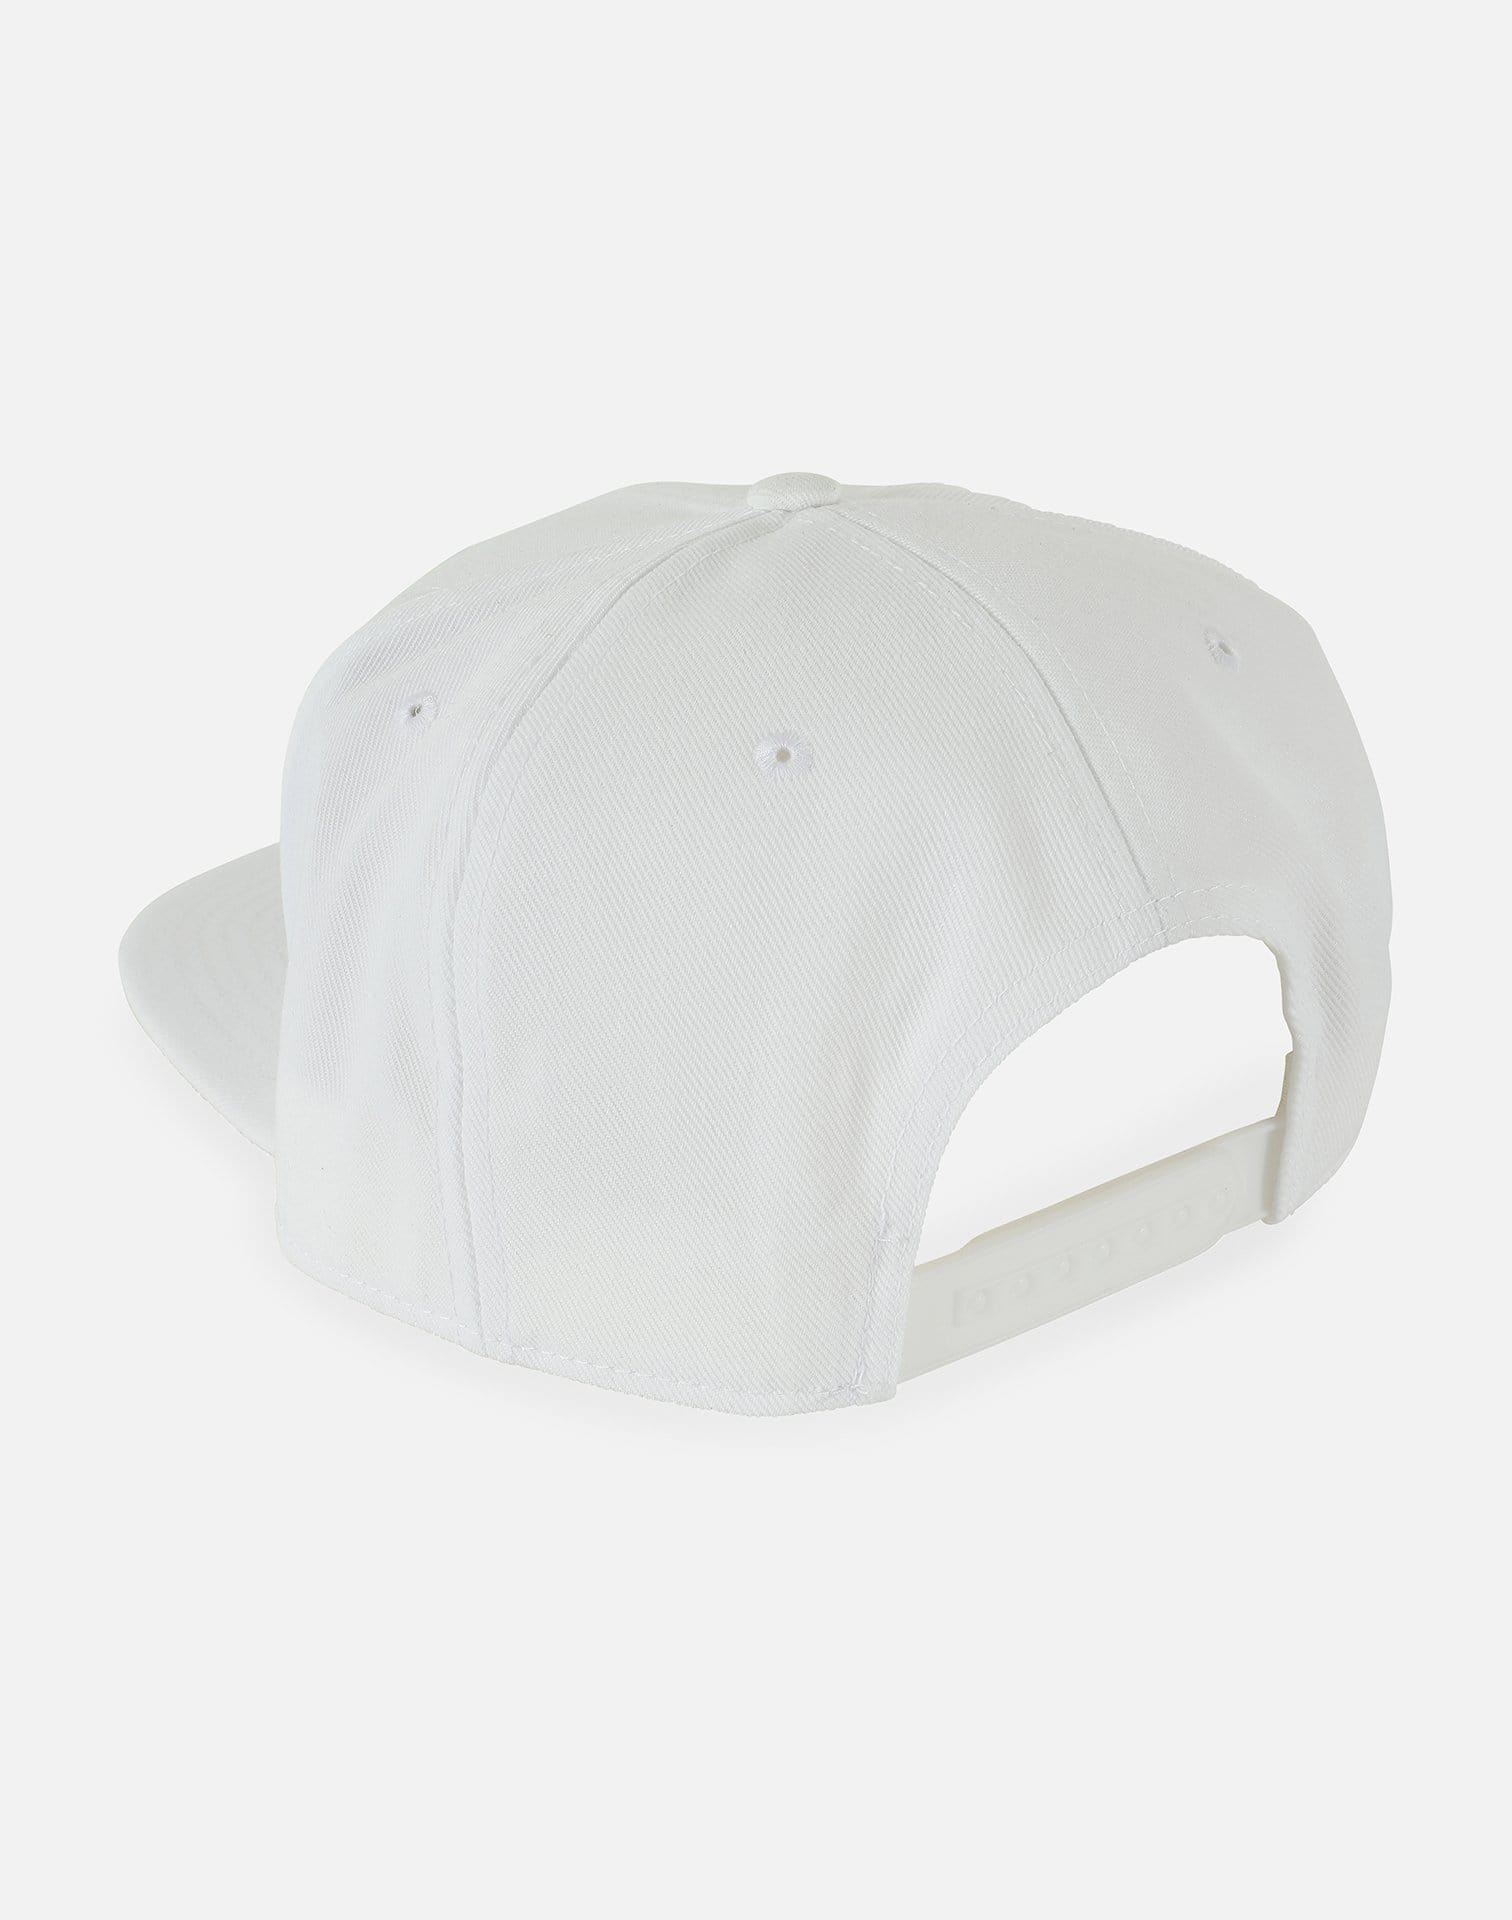 Nike NSW Air True Snapback Hat